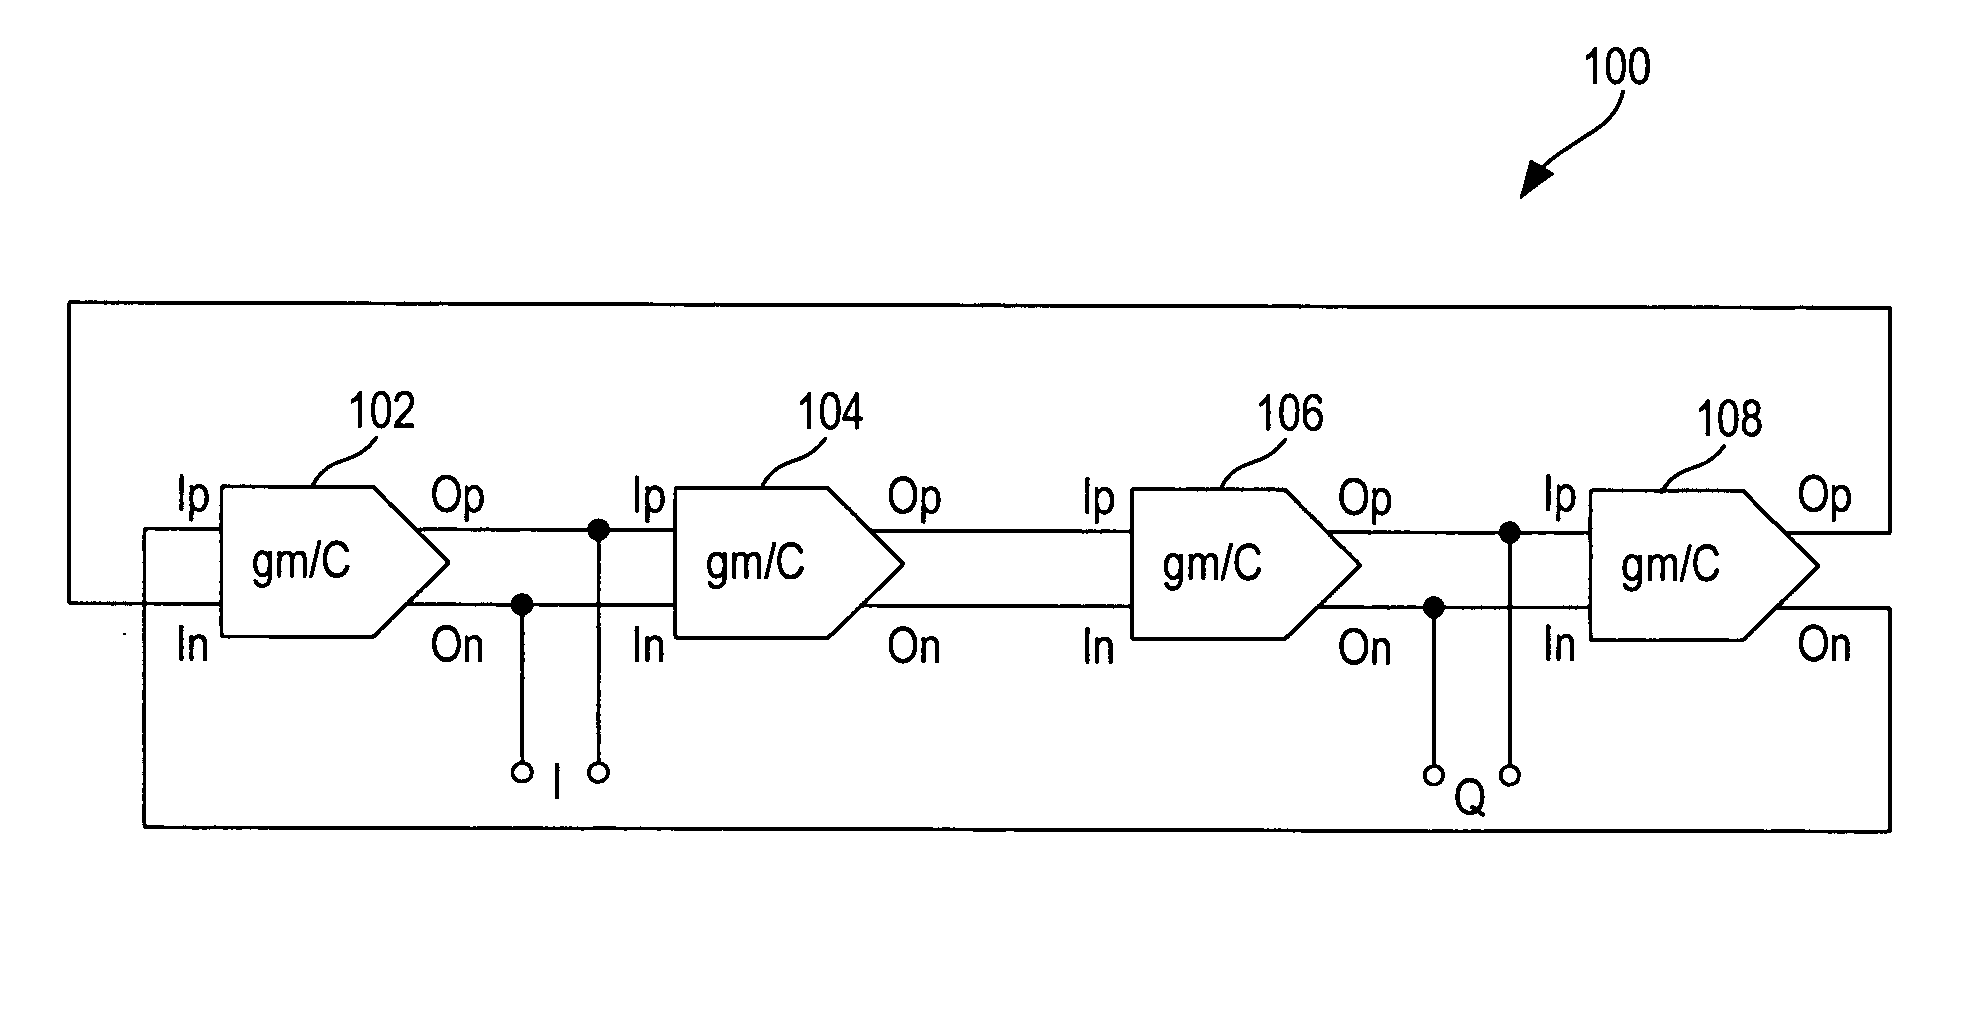 Current-controlled quadrature oscillator using differential gm/C cells incorporating amplitude limiters